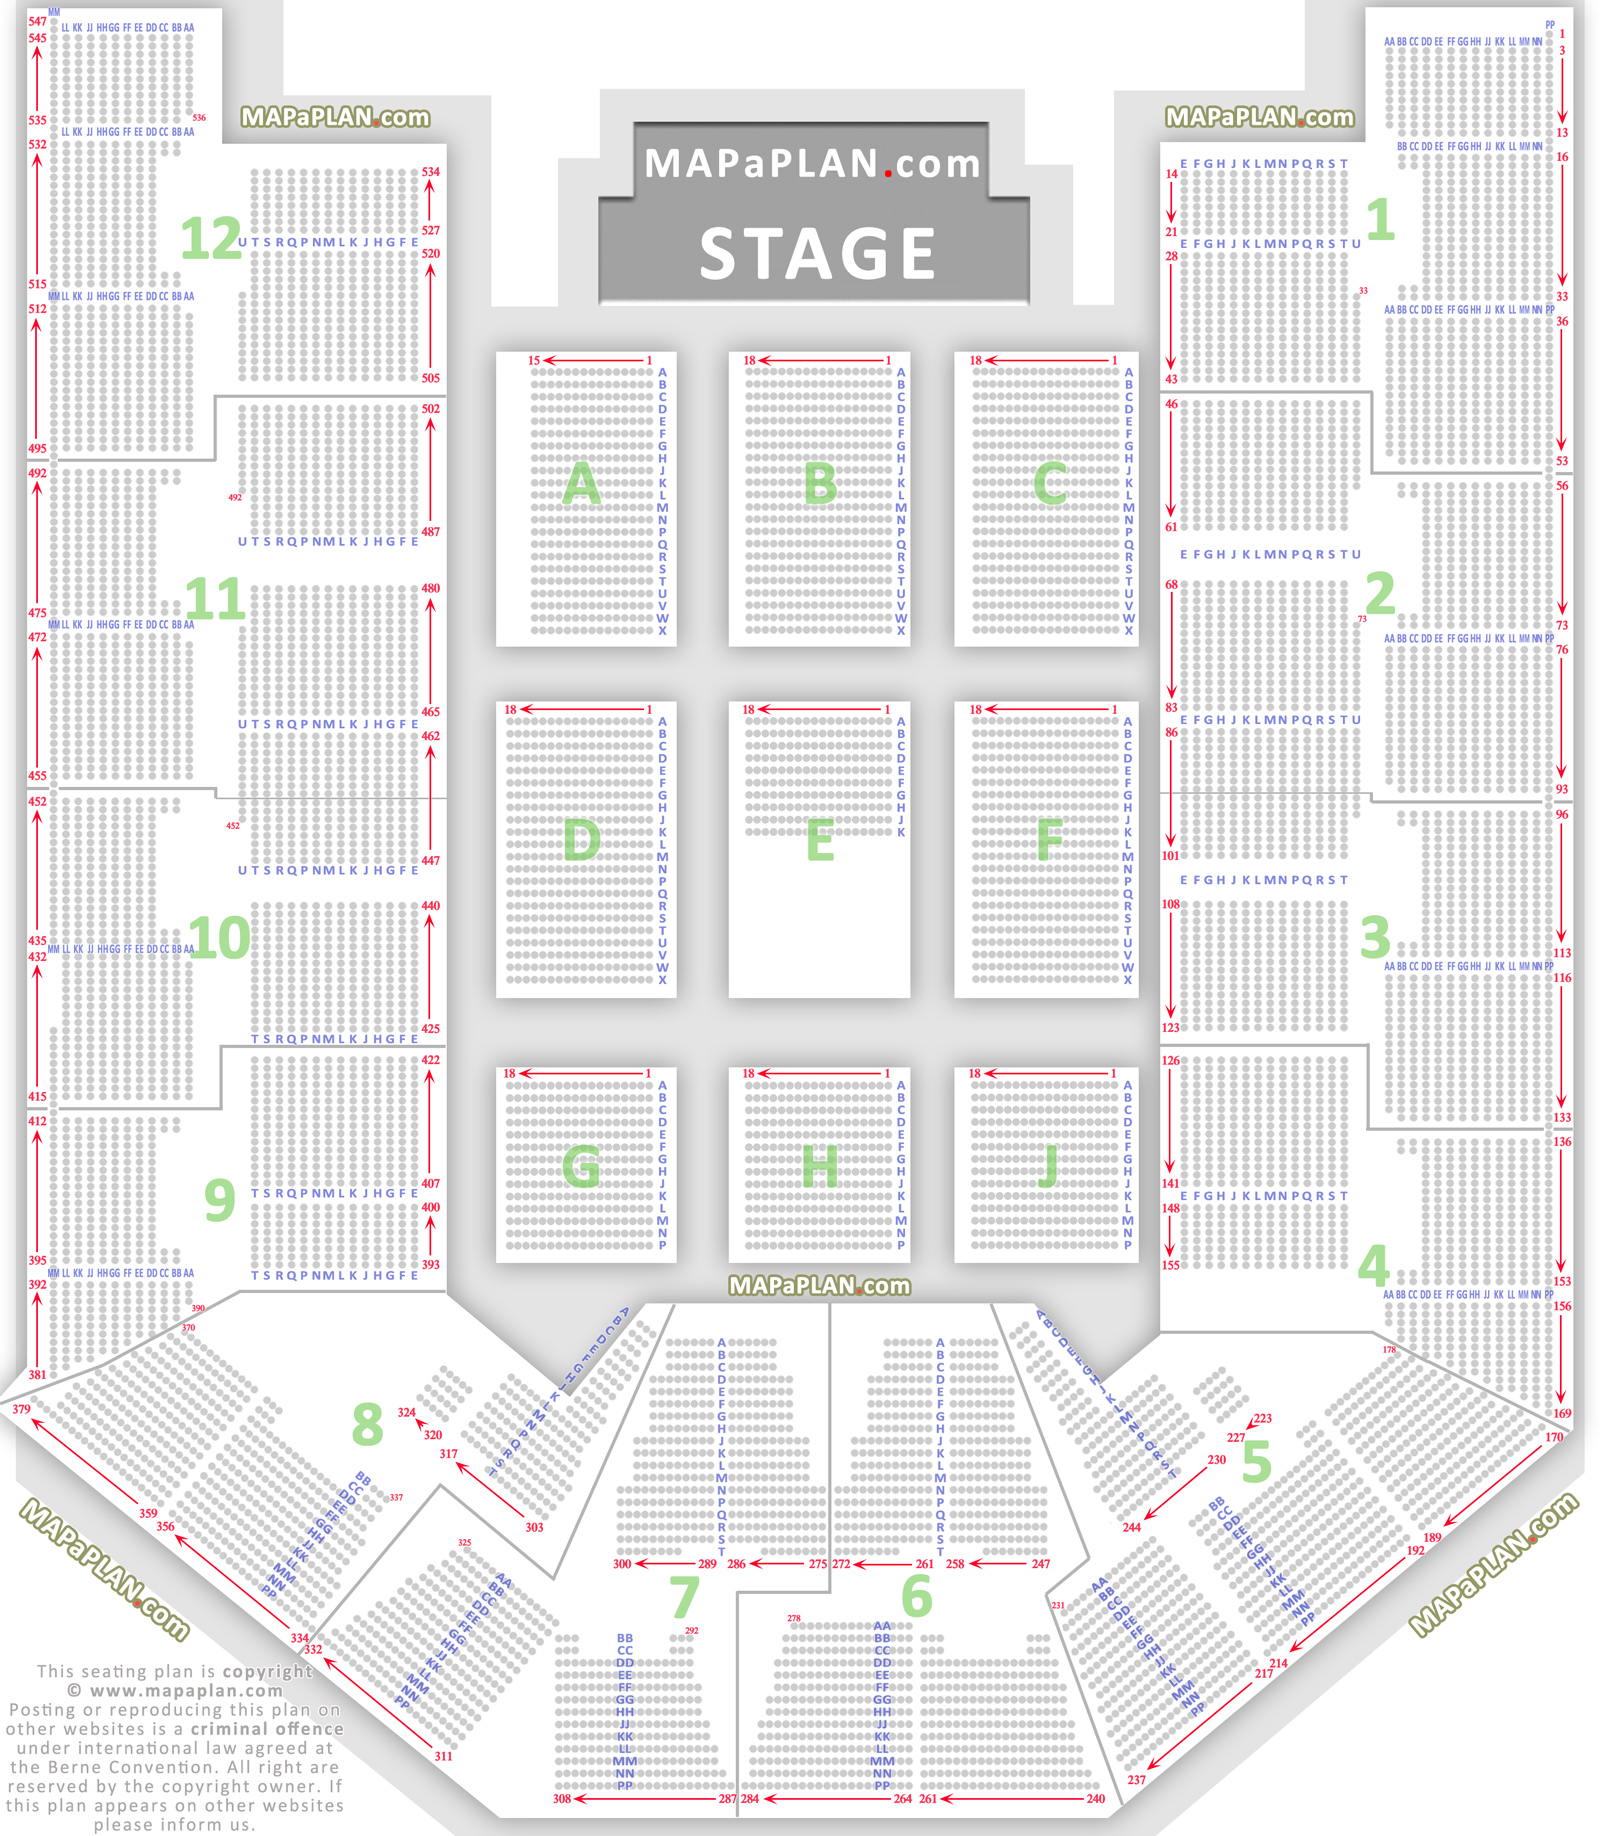 Detailed seat row numbers concert chart floor lower upper tier level block layout Birmingham Utilita Arena NIA NIA National Indoor Arena seating plan